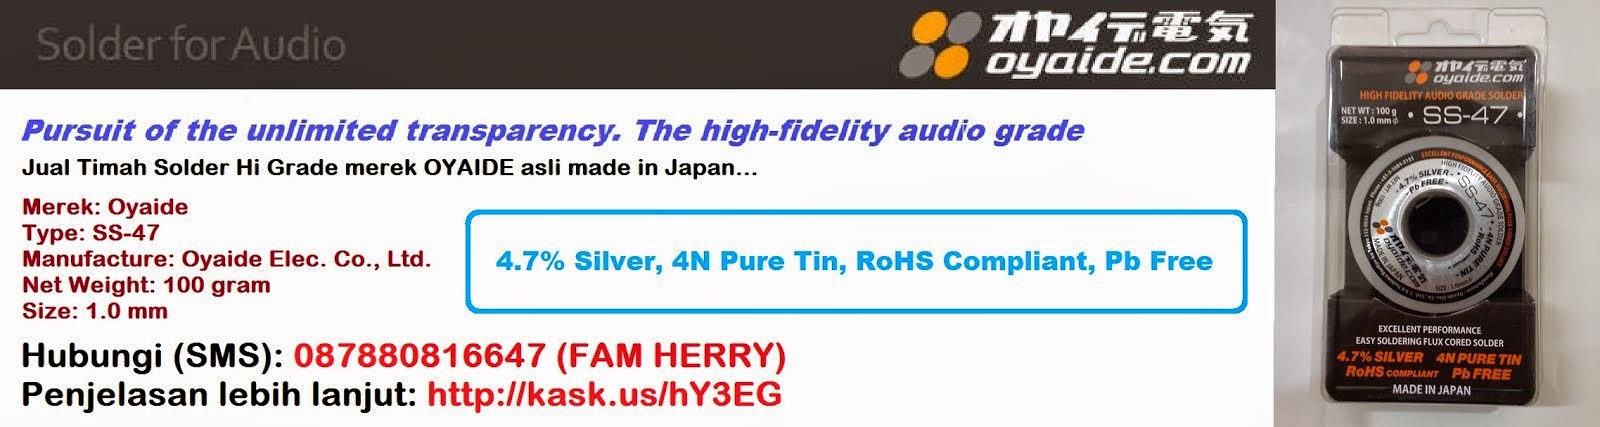 Jual Timah Solder OYAIDE SS-47 100gram (High Fidelity Audio Grade Solder) asli Made In Japan